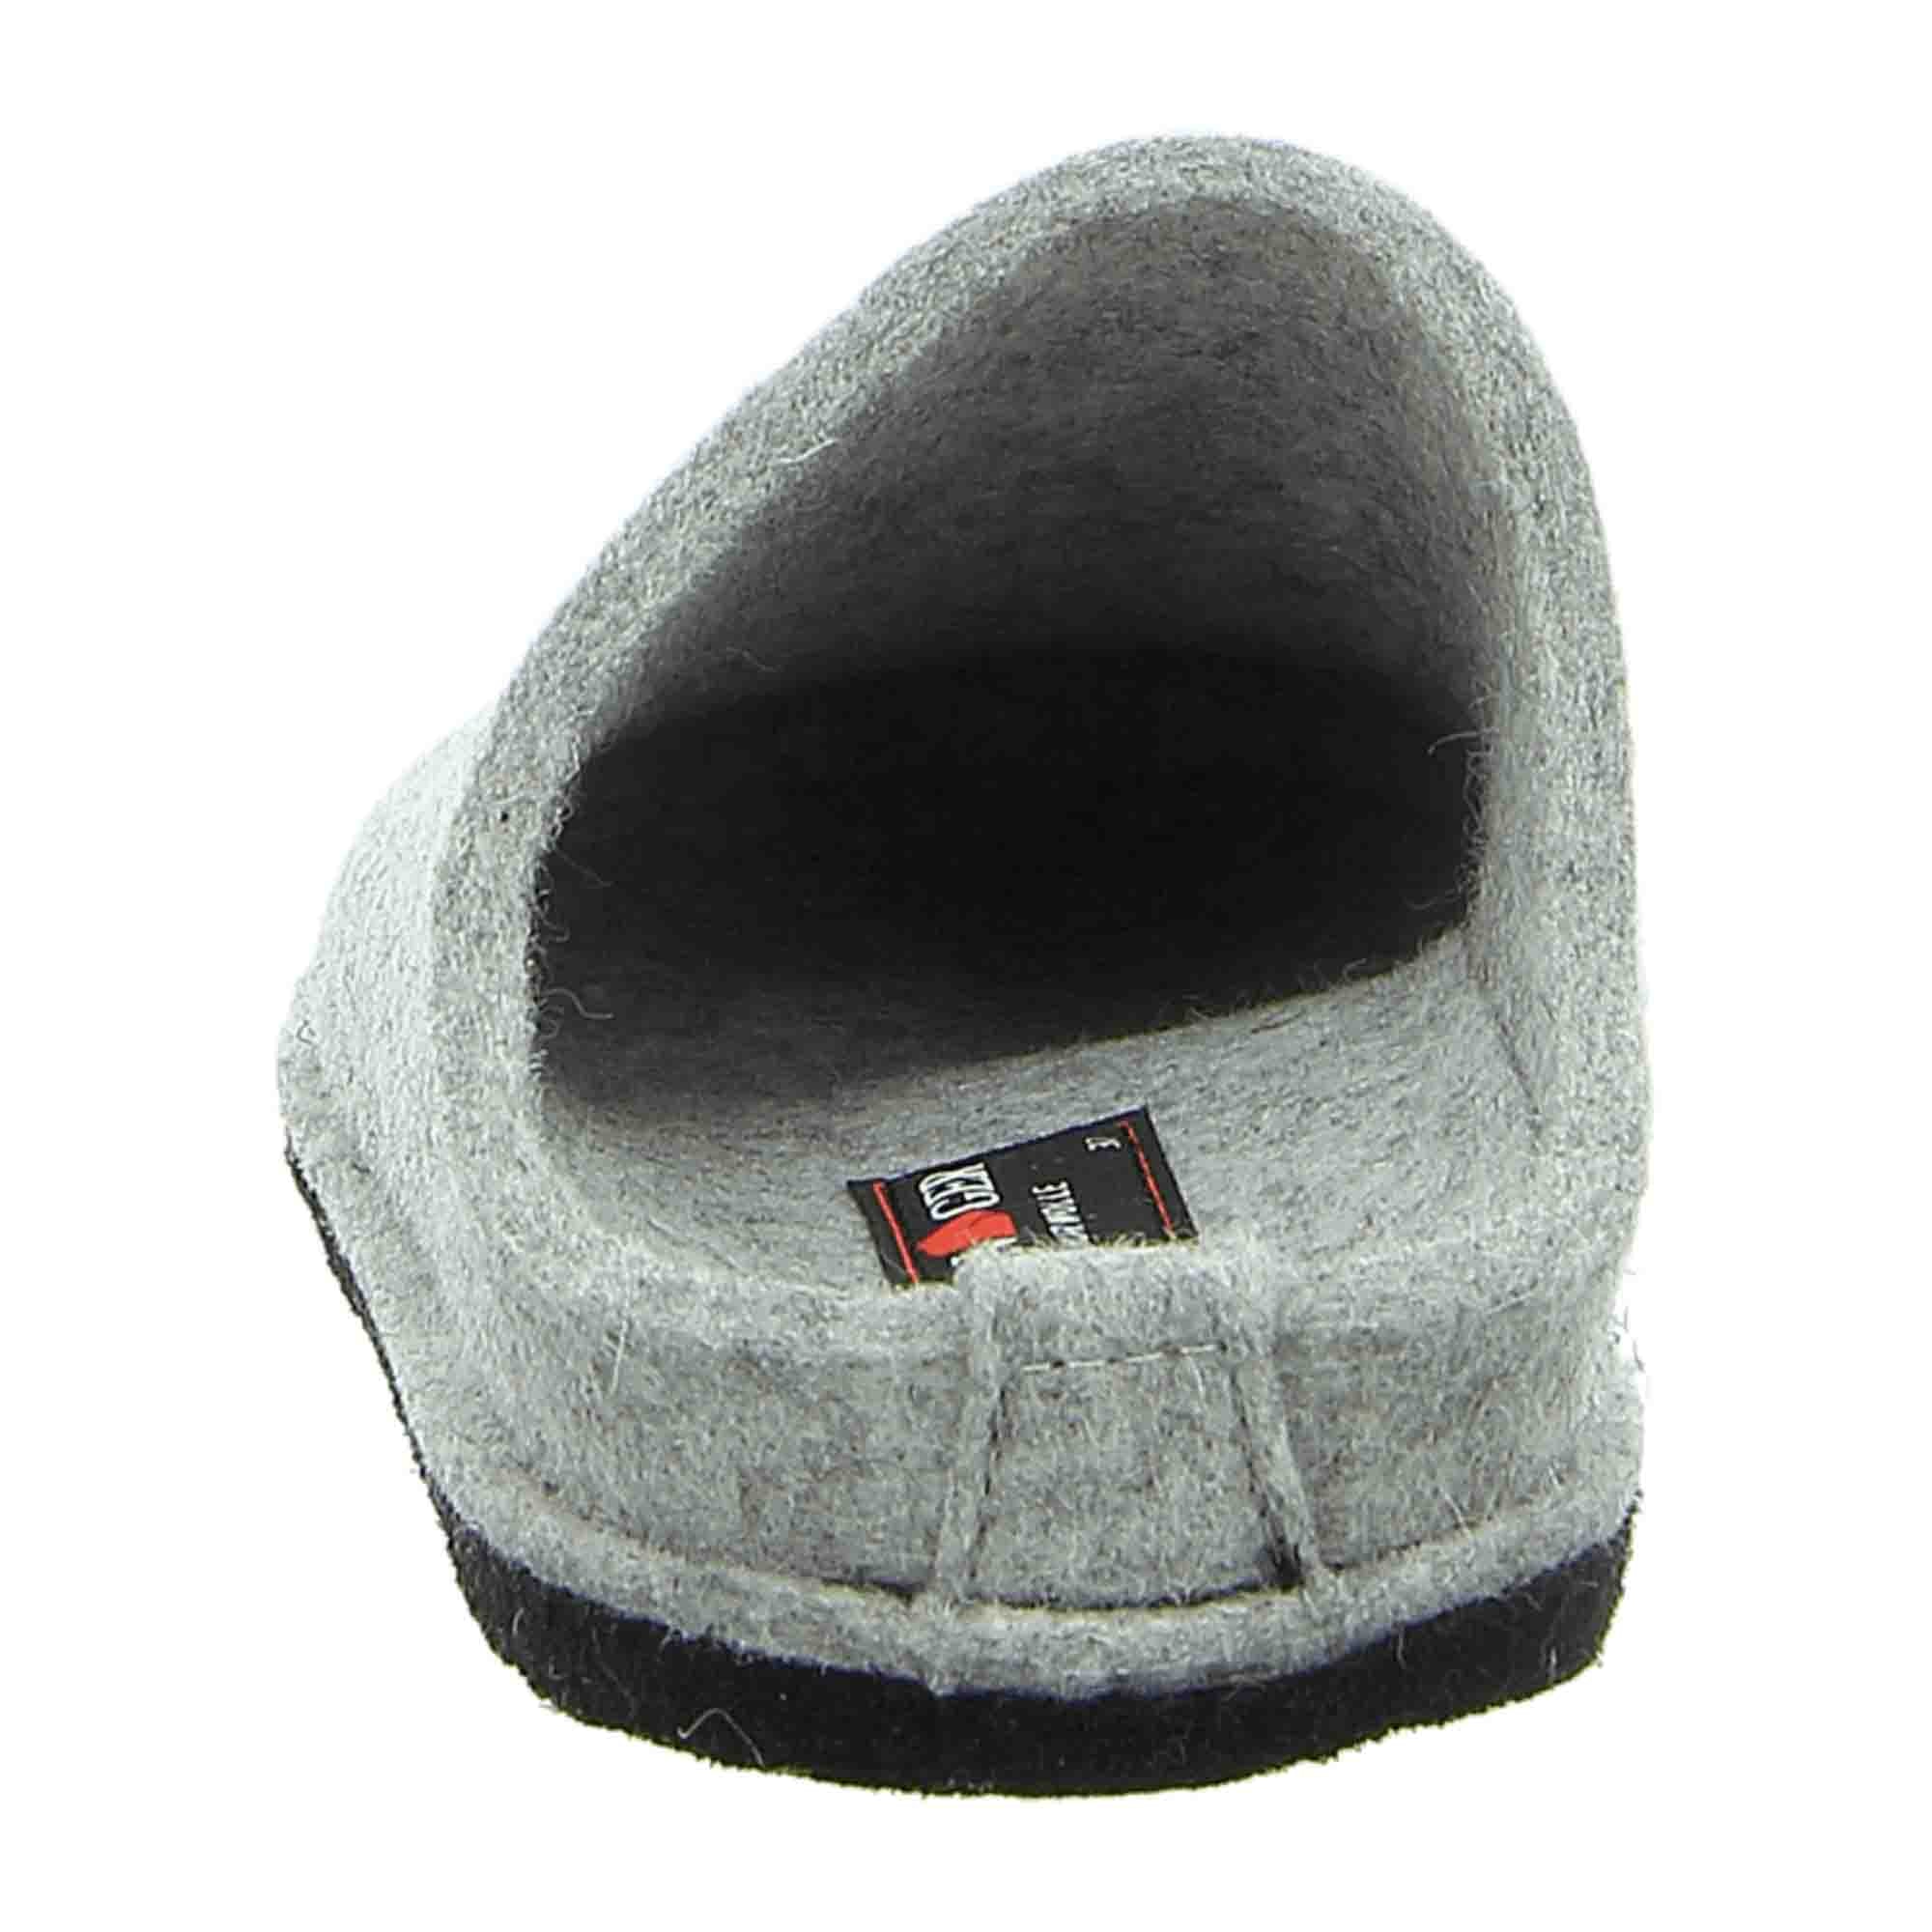 Haflinger Flair Soft Men's Slippers, Grey - Cozy & Stylish Indoor Footwear